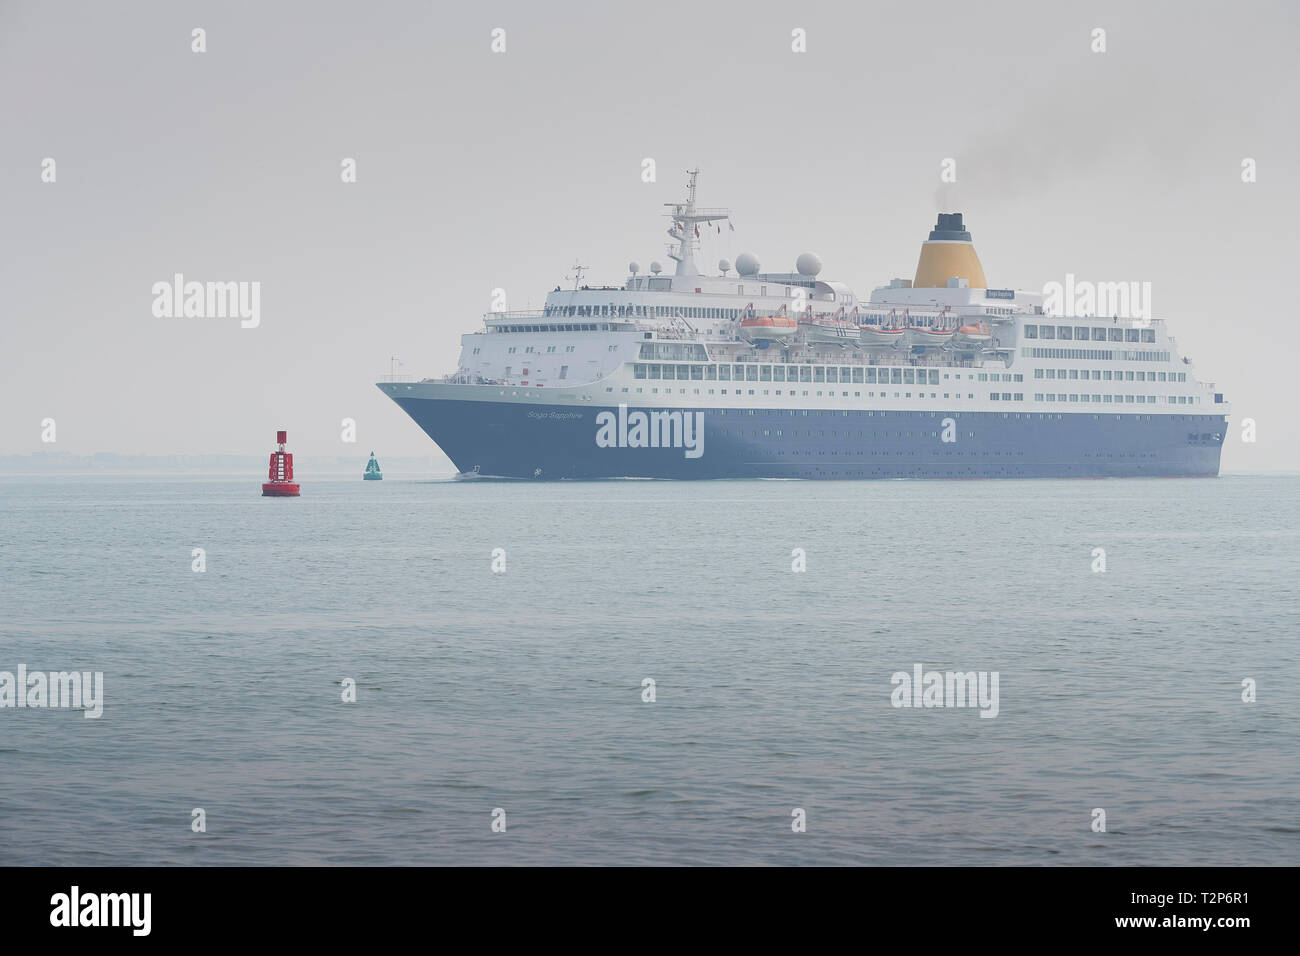 The Saga Cruises (Saga Shipping), Cruise Ship, Saga Sapphire, Approaches The Port Of Southampton, UK. 28 March 2019 Stock Photo